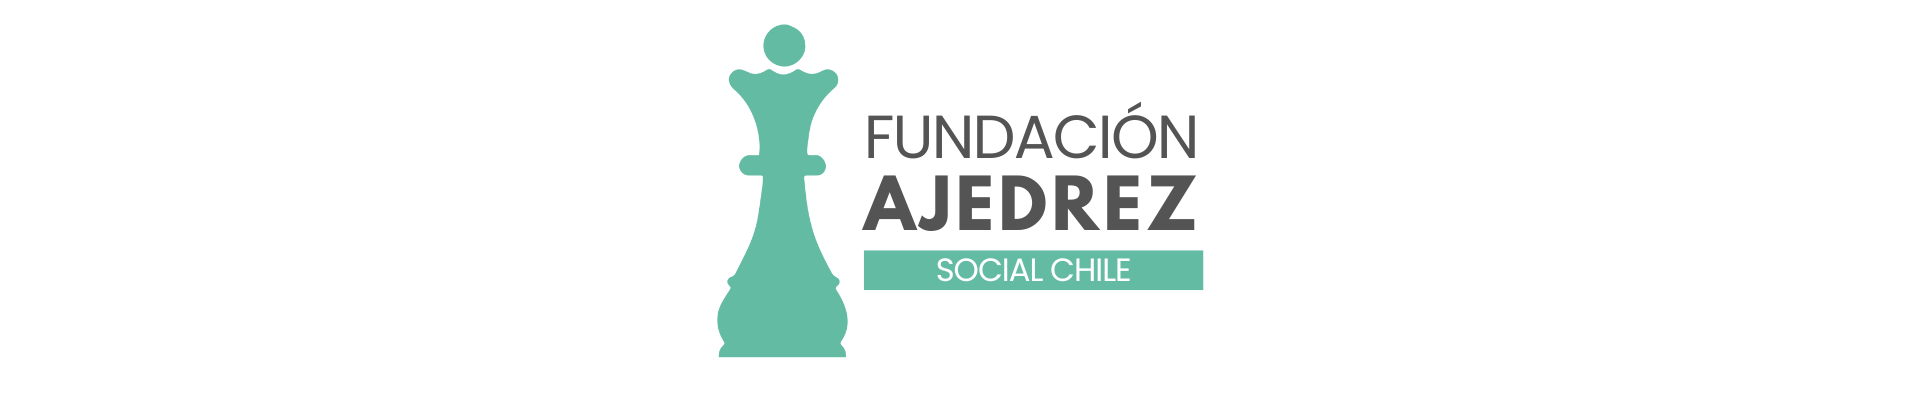 Fundación de Ajedrez Social Chile